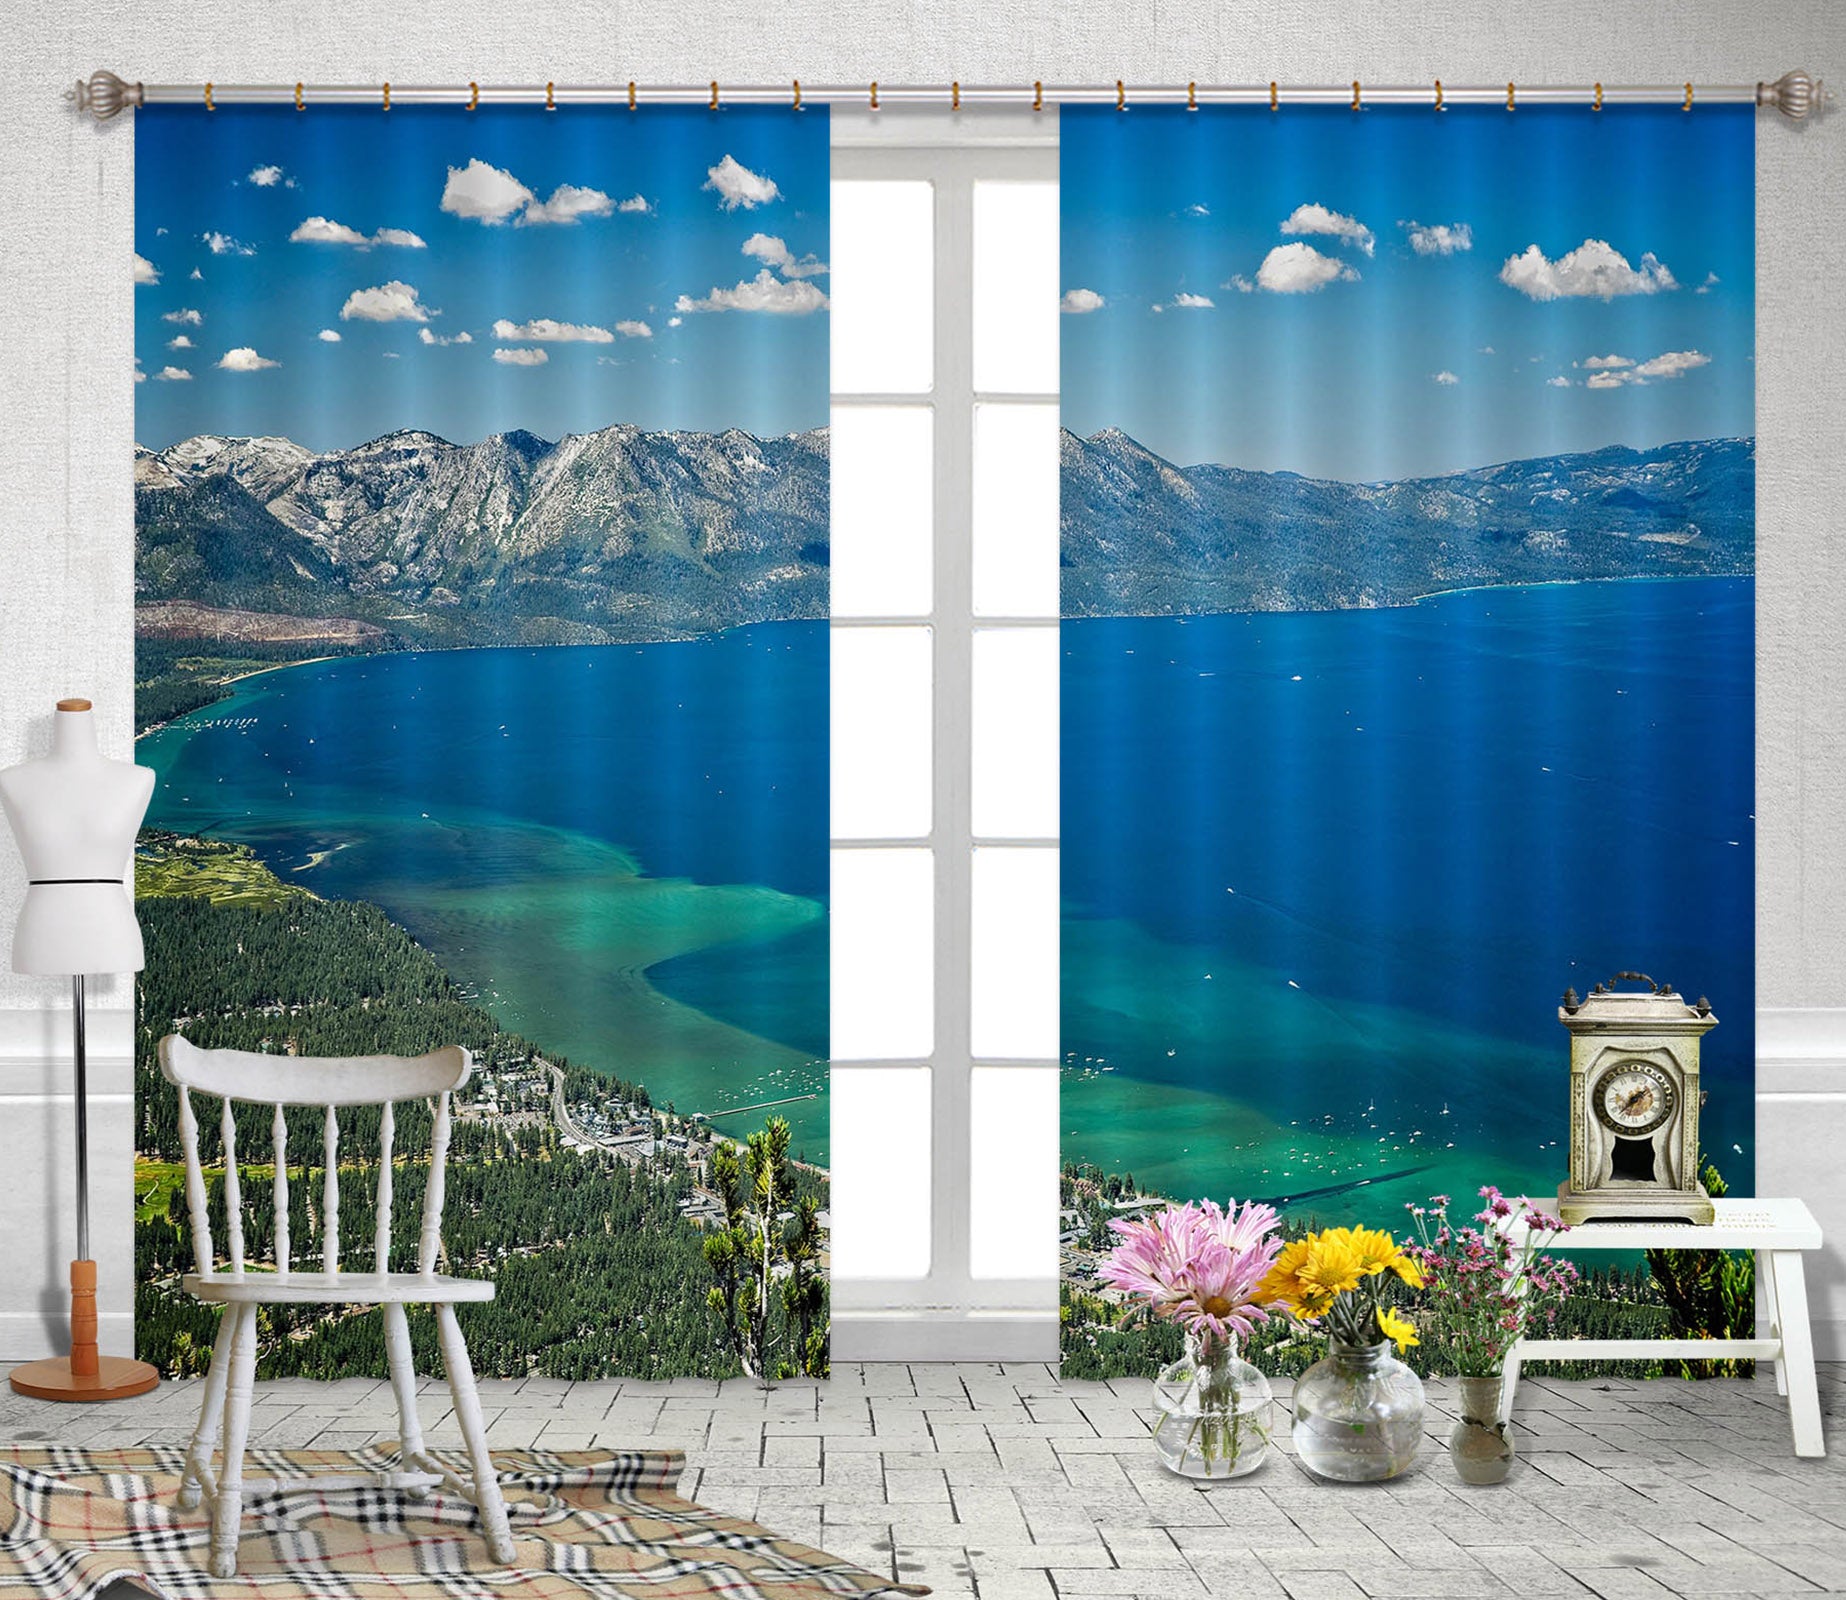 3D Ocean 62165 Kathy Barefield Curtain Curtains Drapes